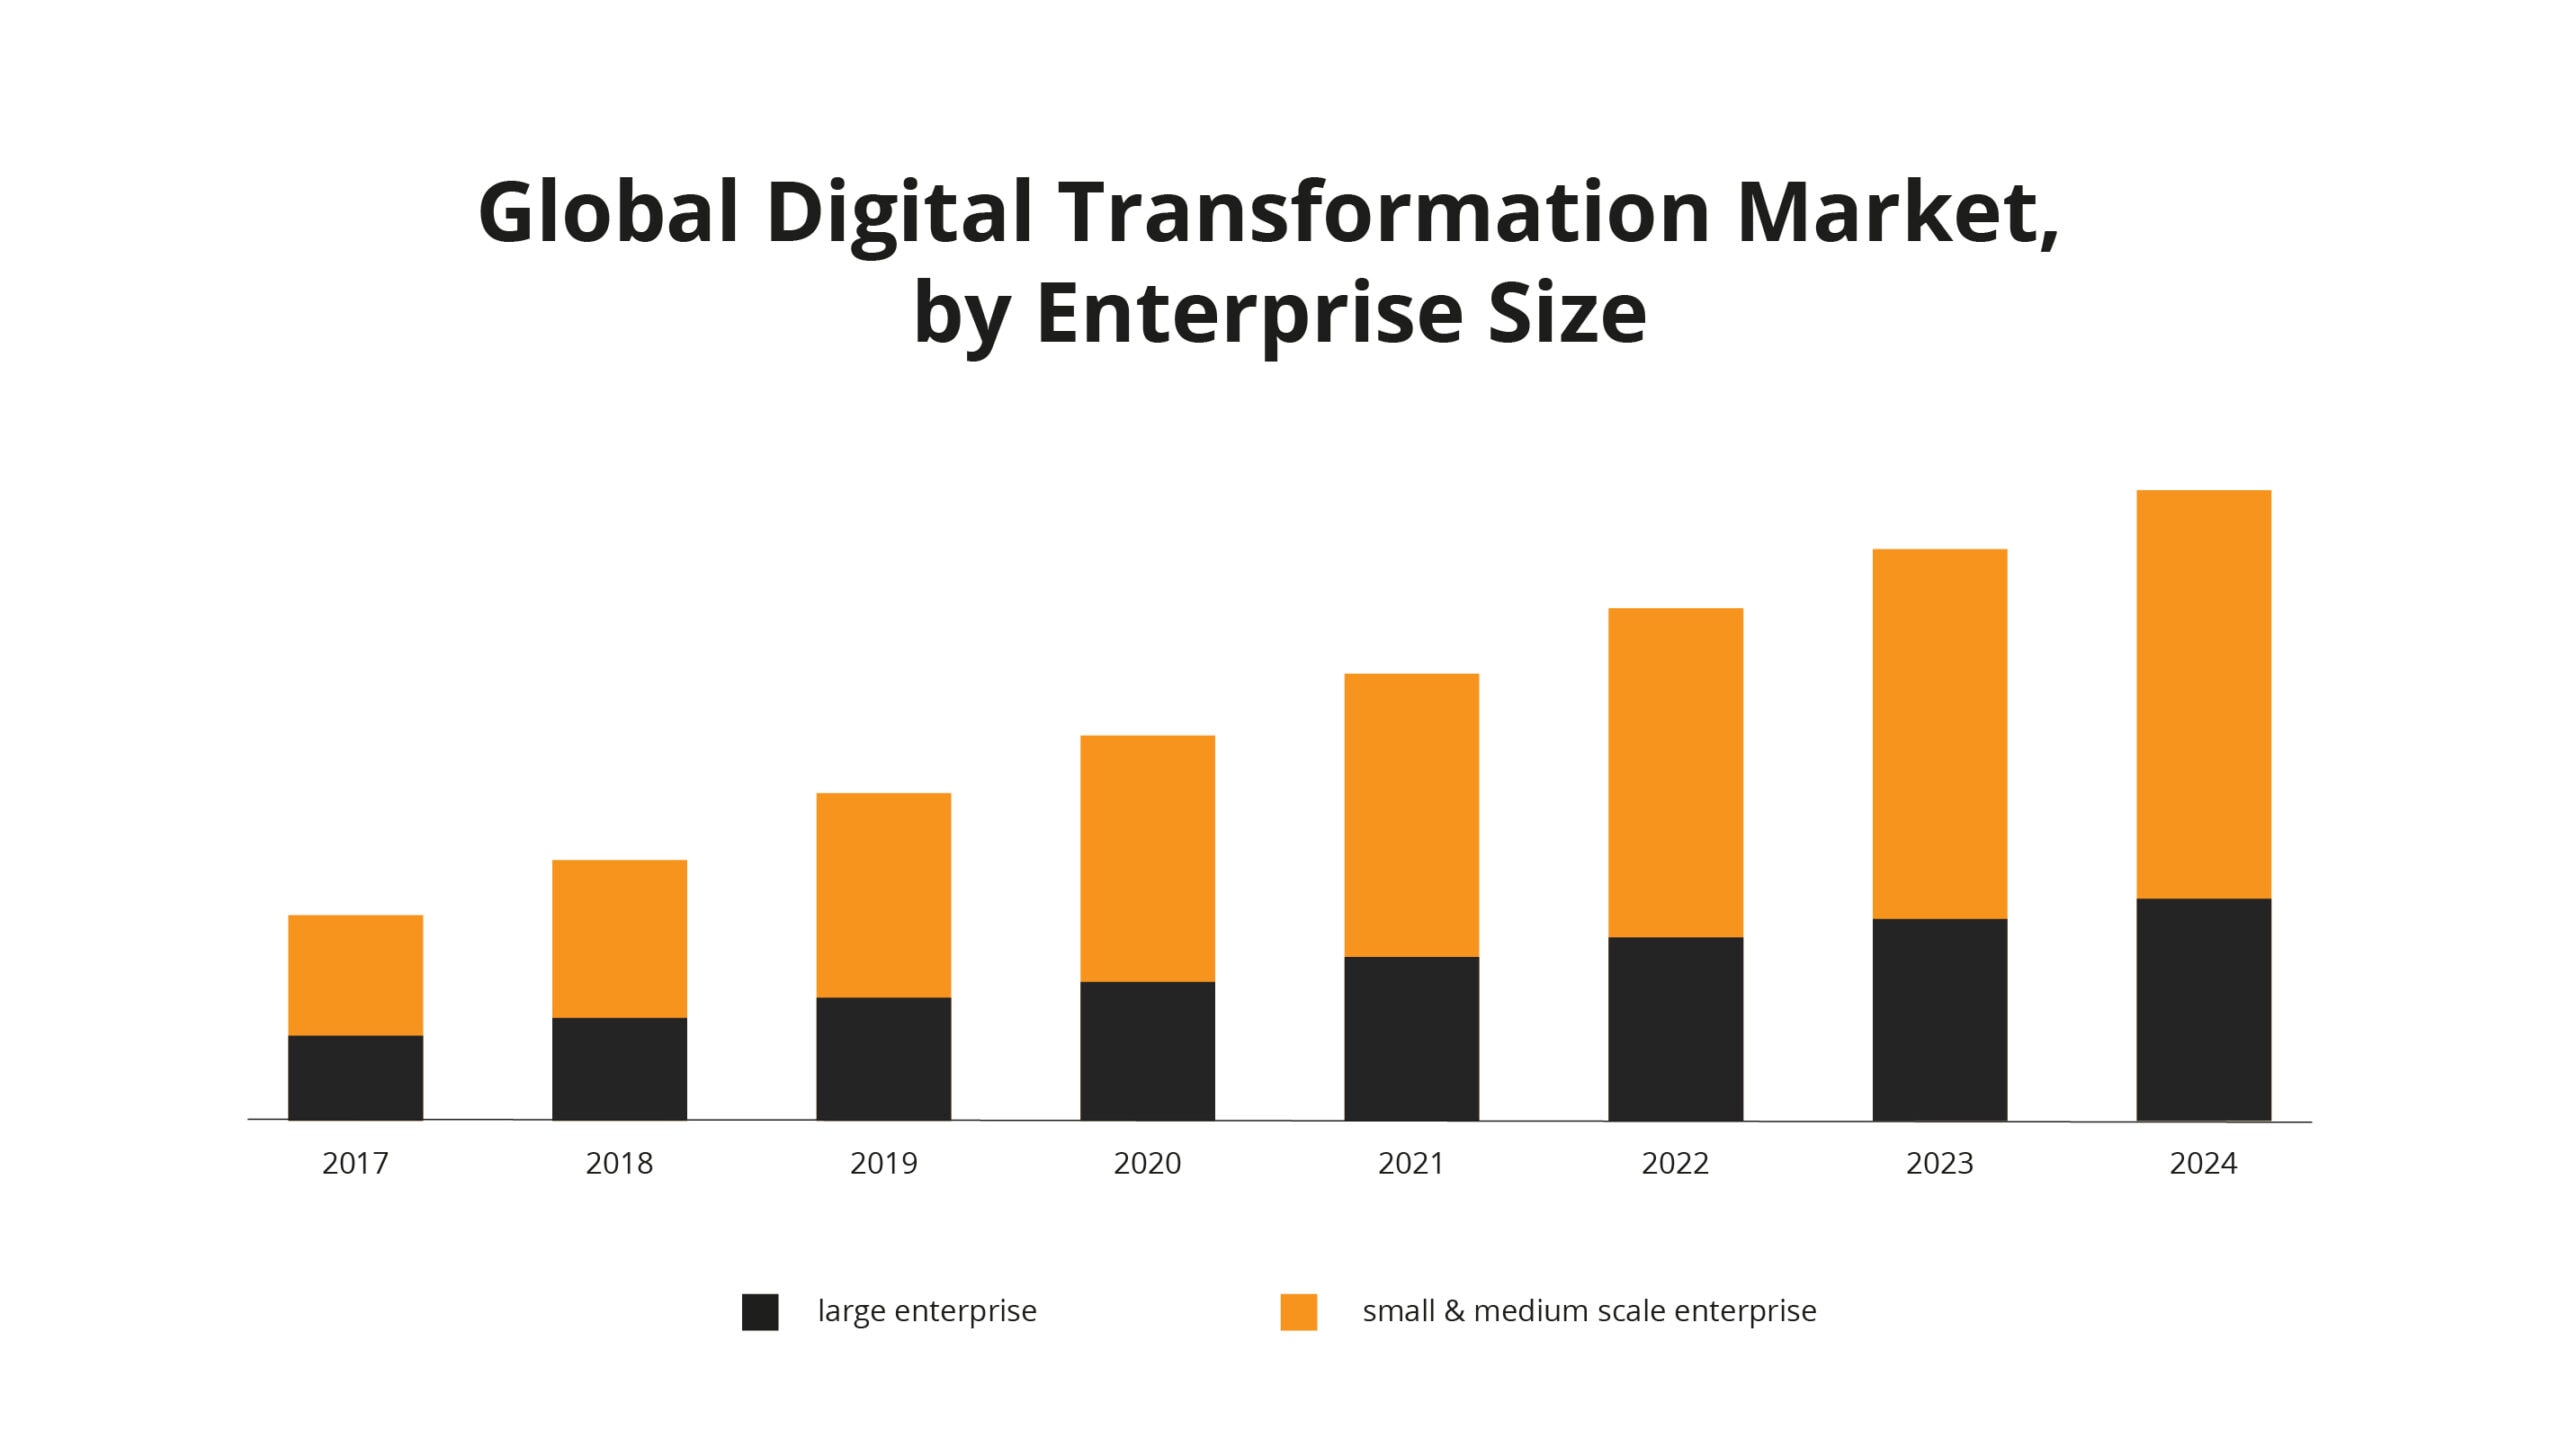 Global Digital Transformation Market by Enterprise Size